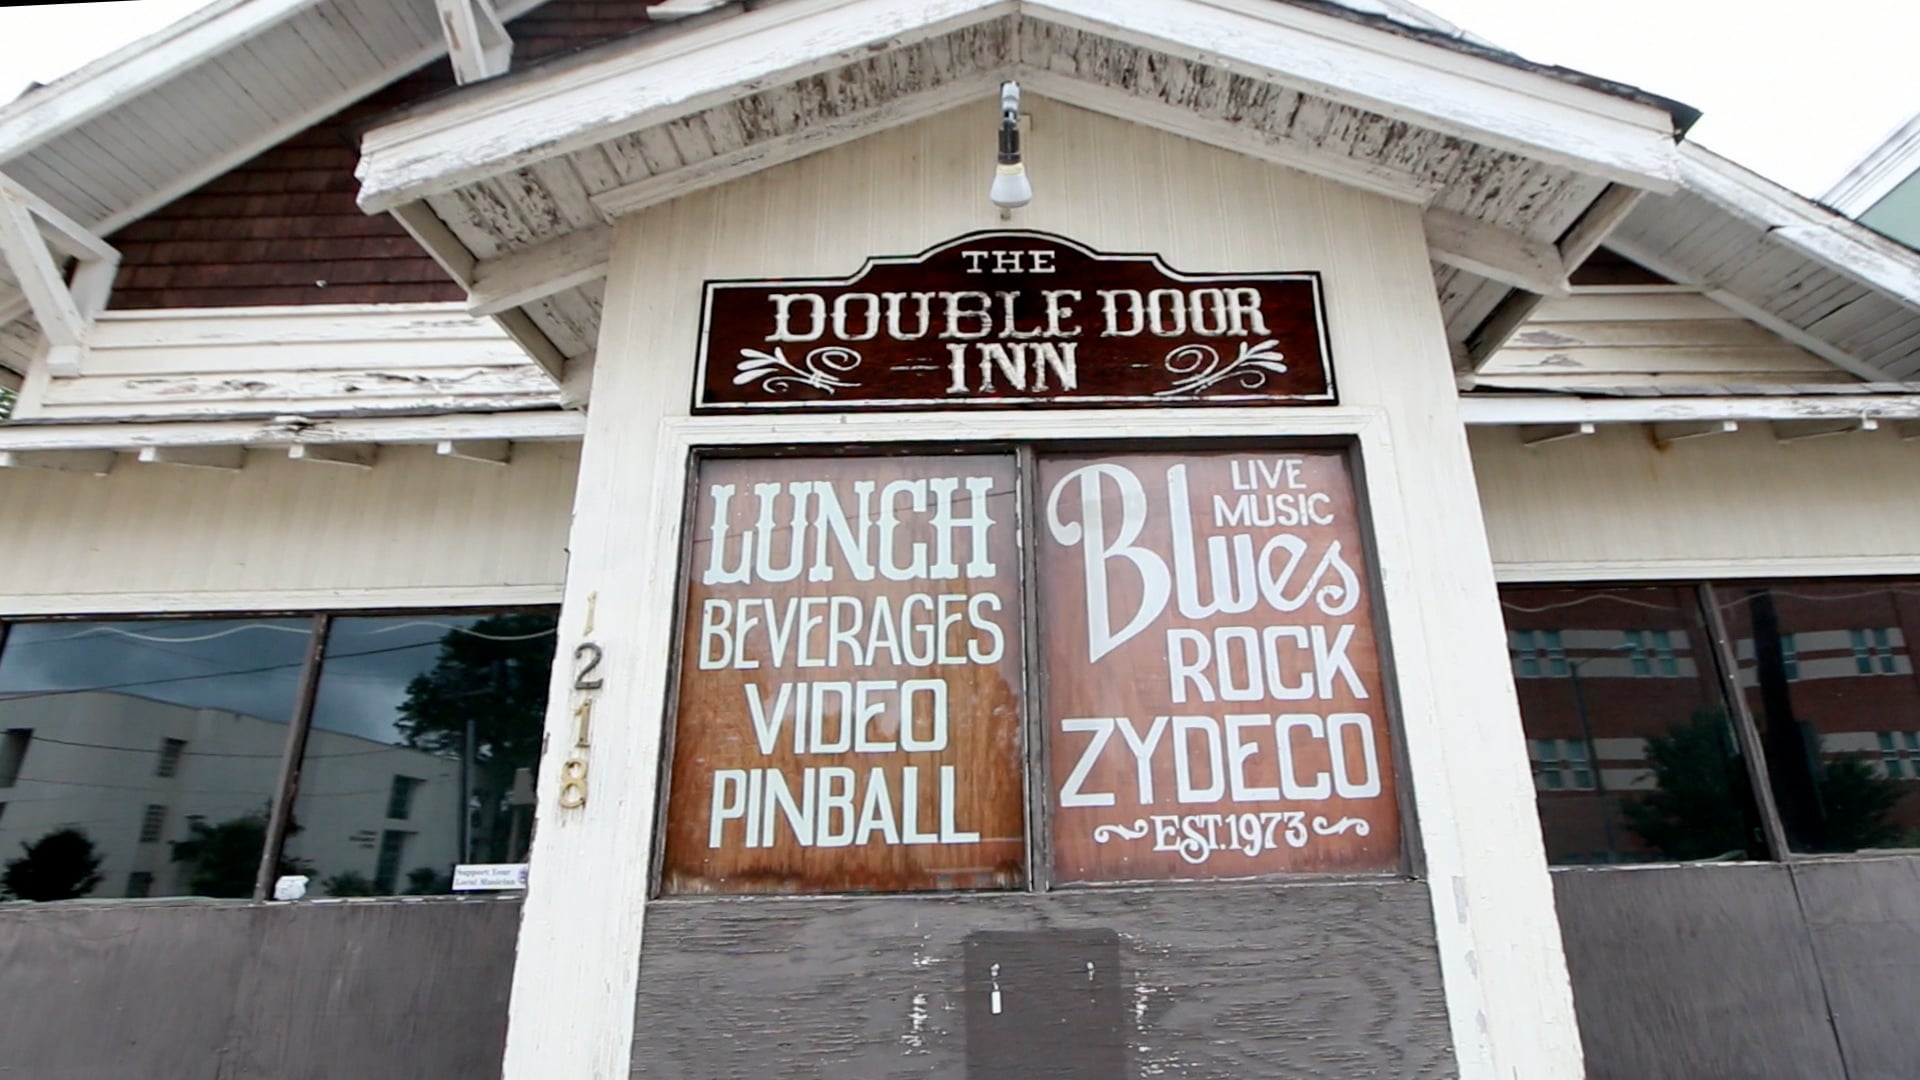 "Live From The Double Door Inn"